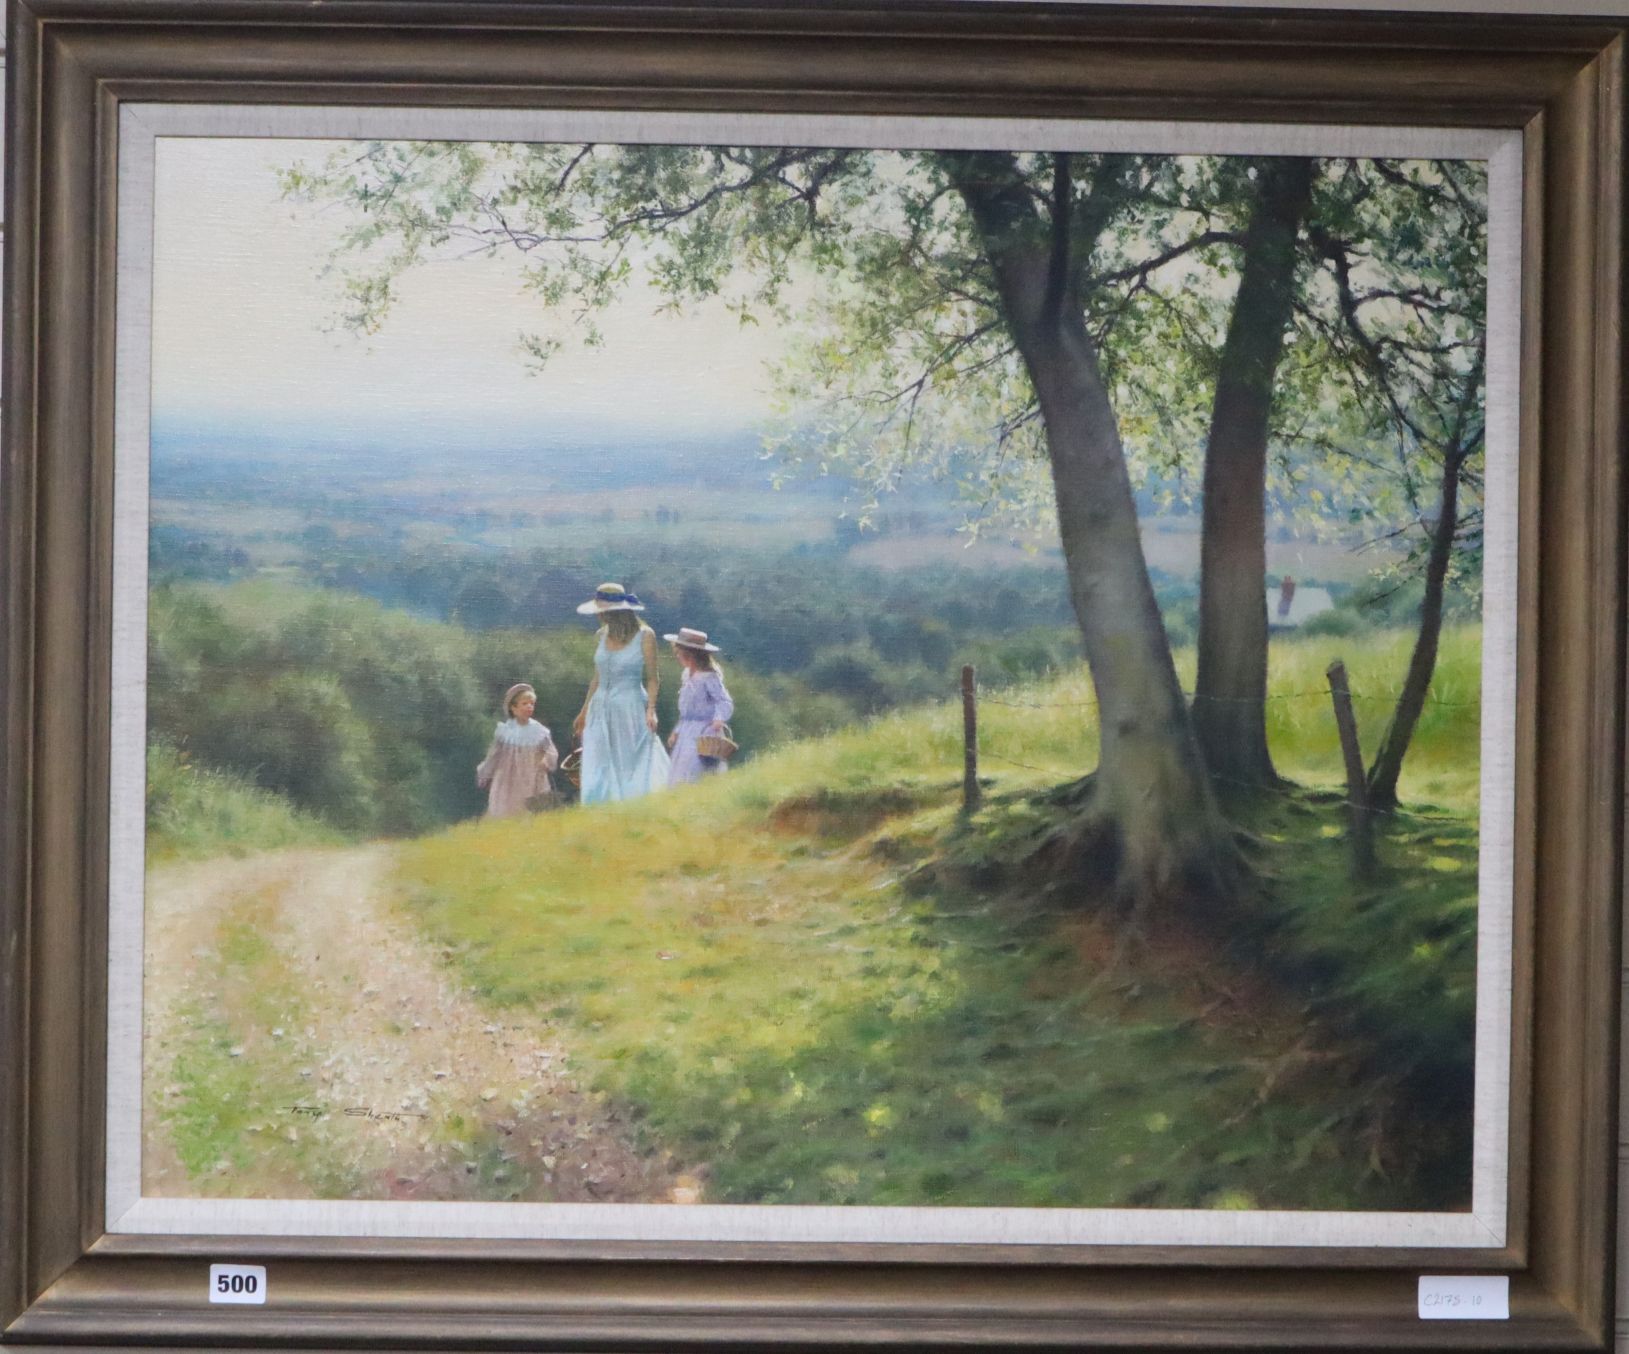 Tony Sheath (1946-) oil on canvas, 'Country Walk', signed, 59 x 75cm